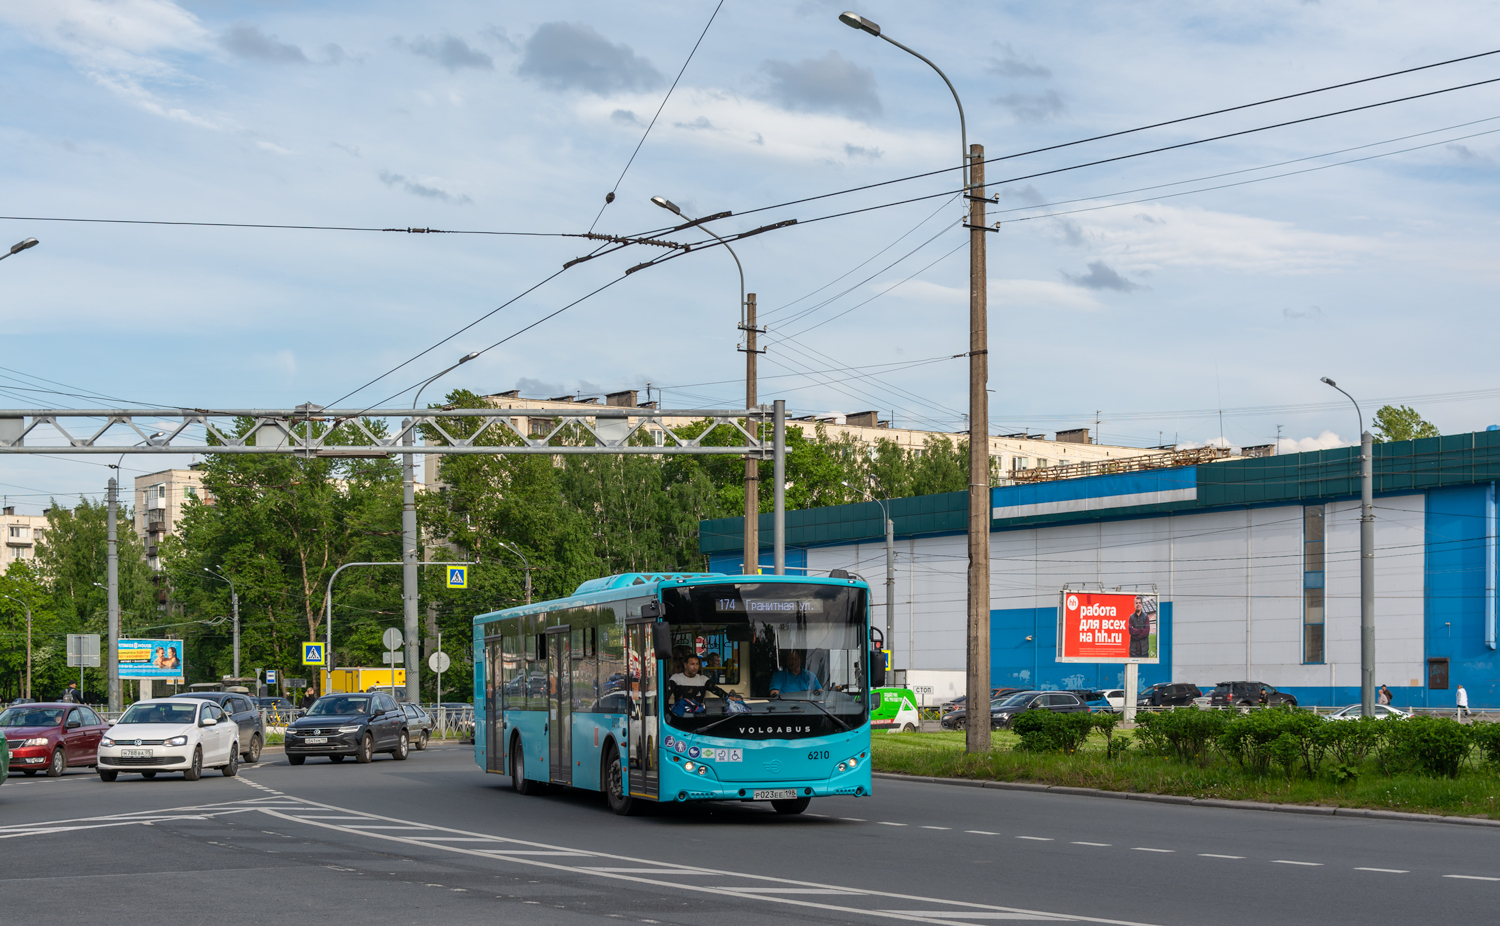 Saint Petersburg, Volgabus-5270.G2 (LNG) No. 6210